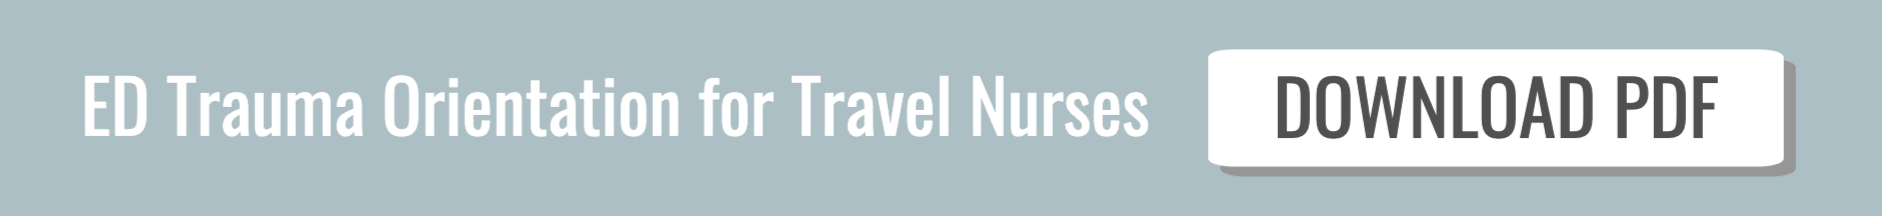 ED Trauma Orientation for Travel Nurses PDF